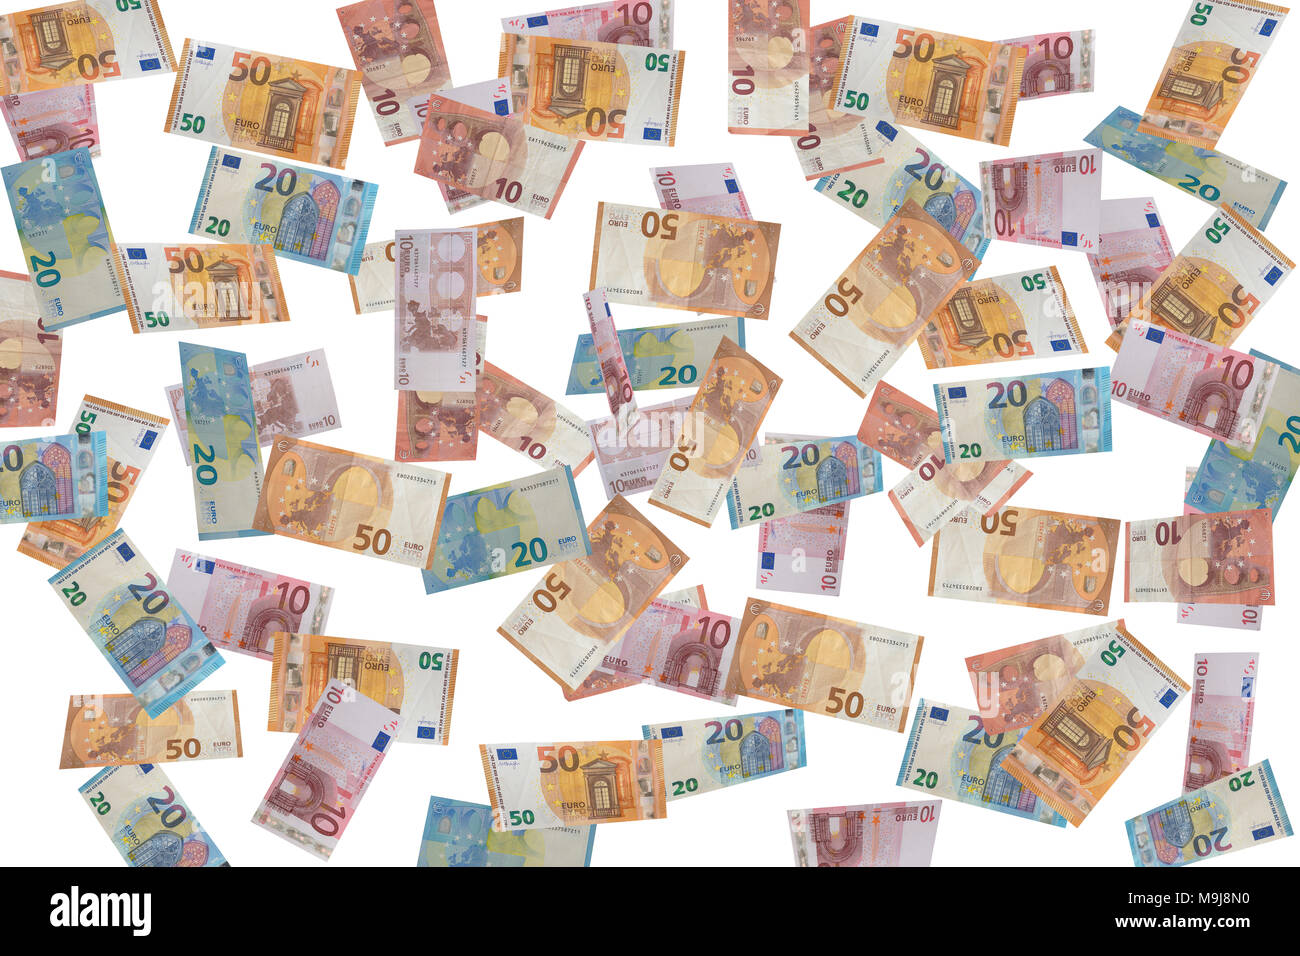 Concept image of European banknotes / money falling Stock Photo